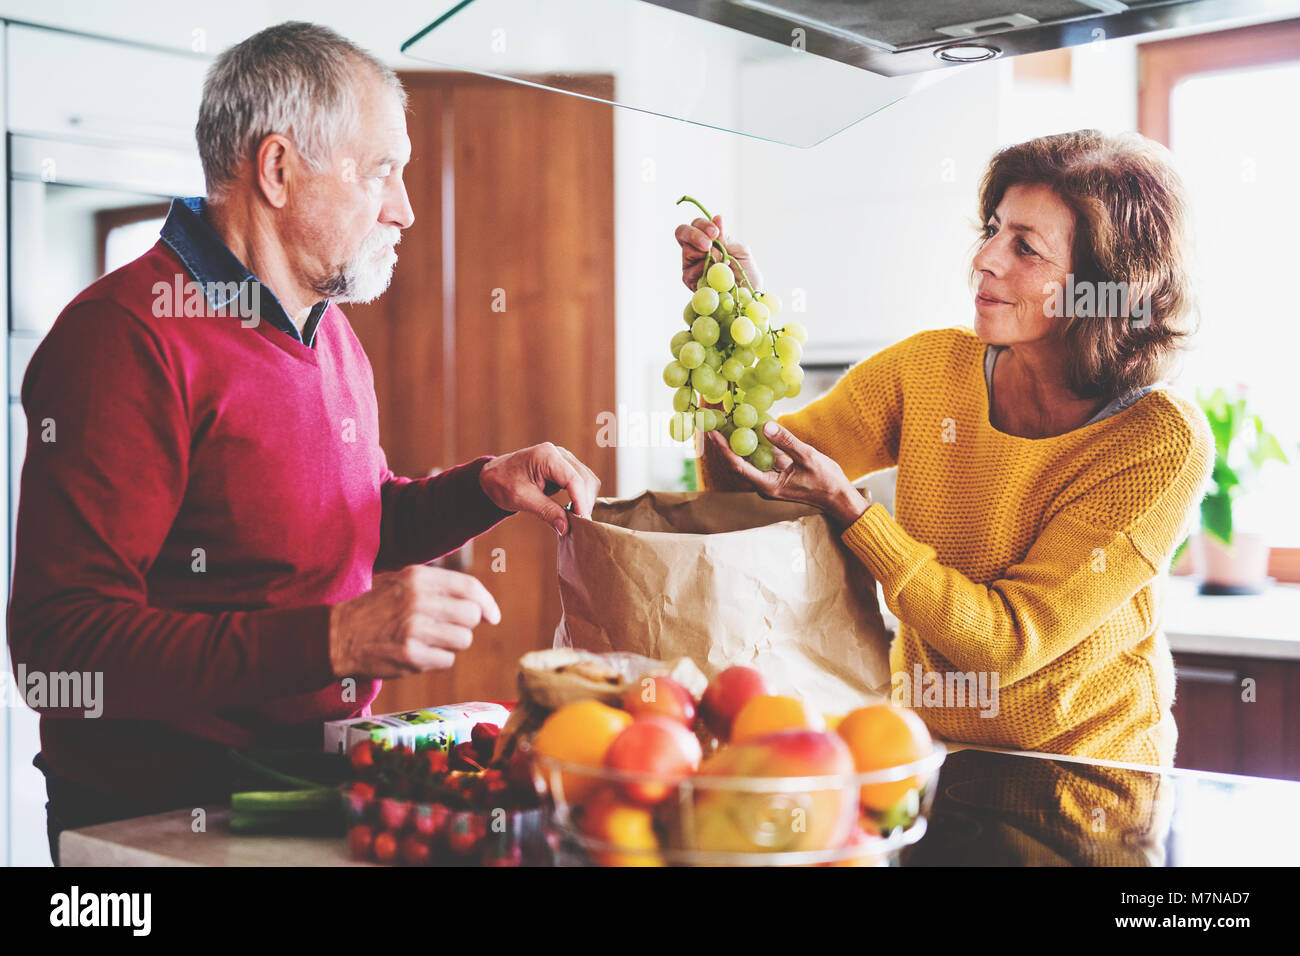 Senior couple unpacking fruit in the kitchen. Stock Photo